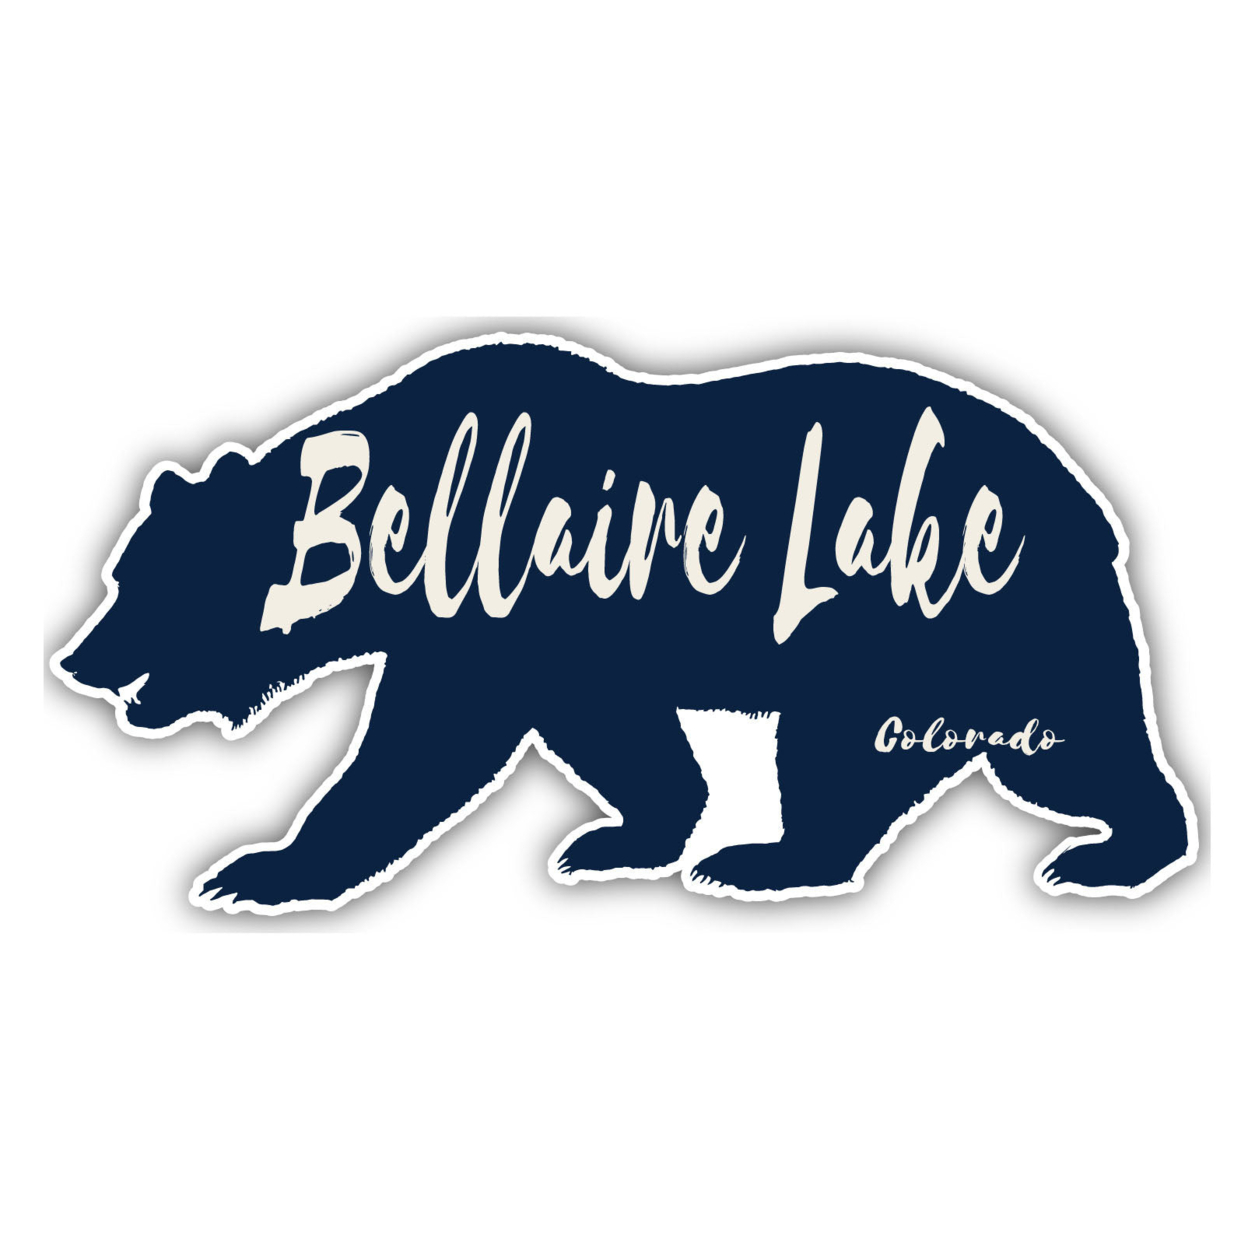 Bellaire Lake Colorado Souvenir Decorative Stickers (Choose Theme And Size) - Single Unit, 2-Inch, Bear